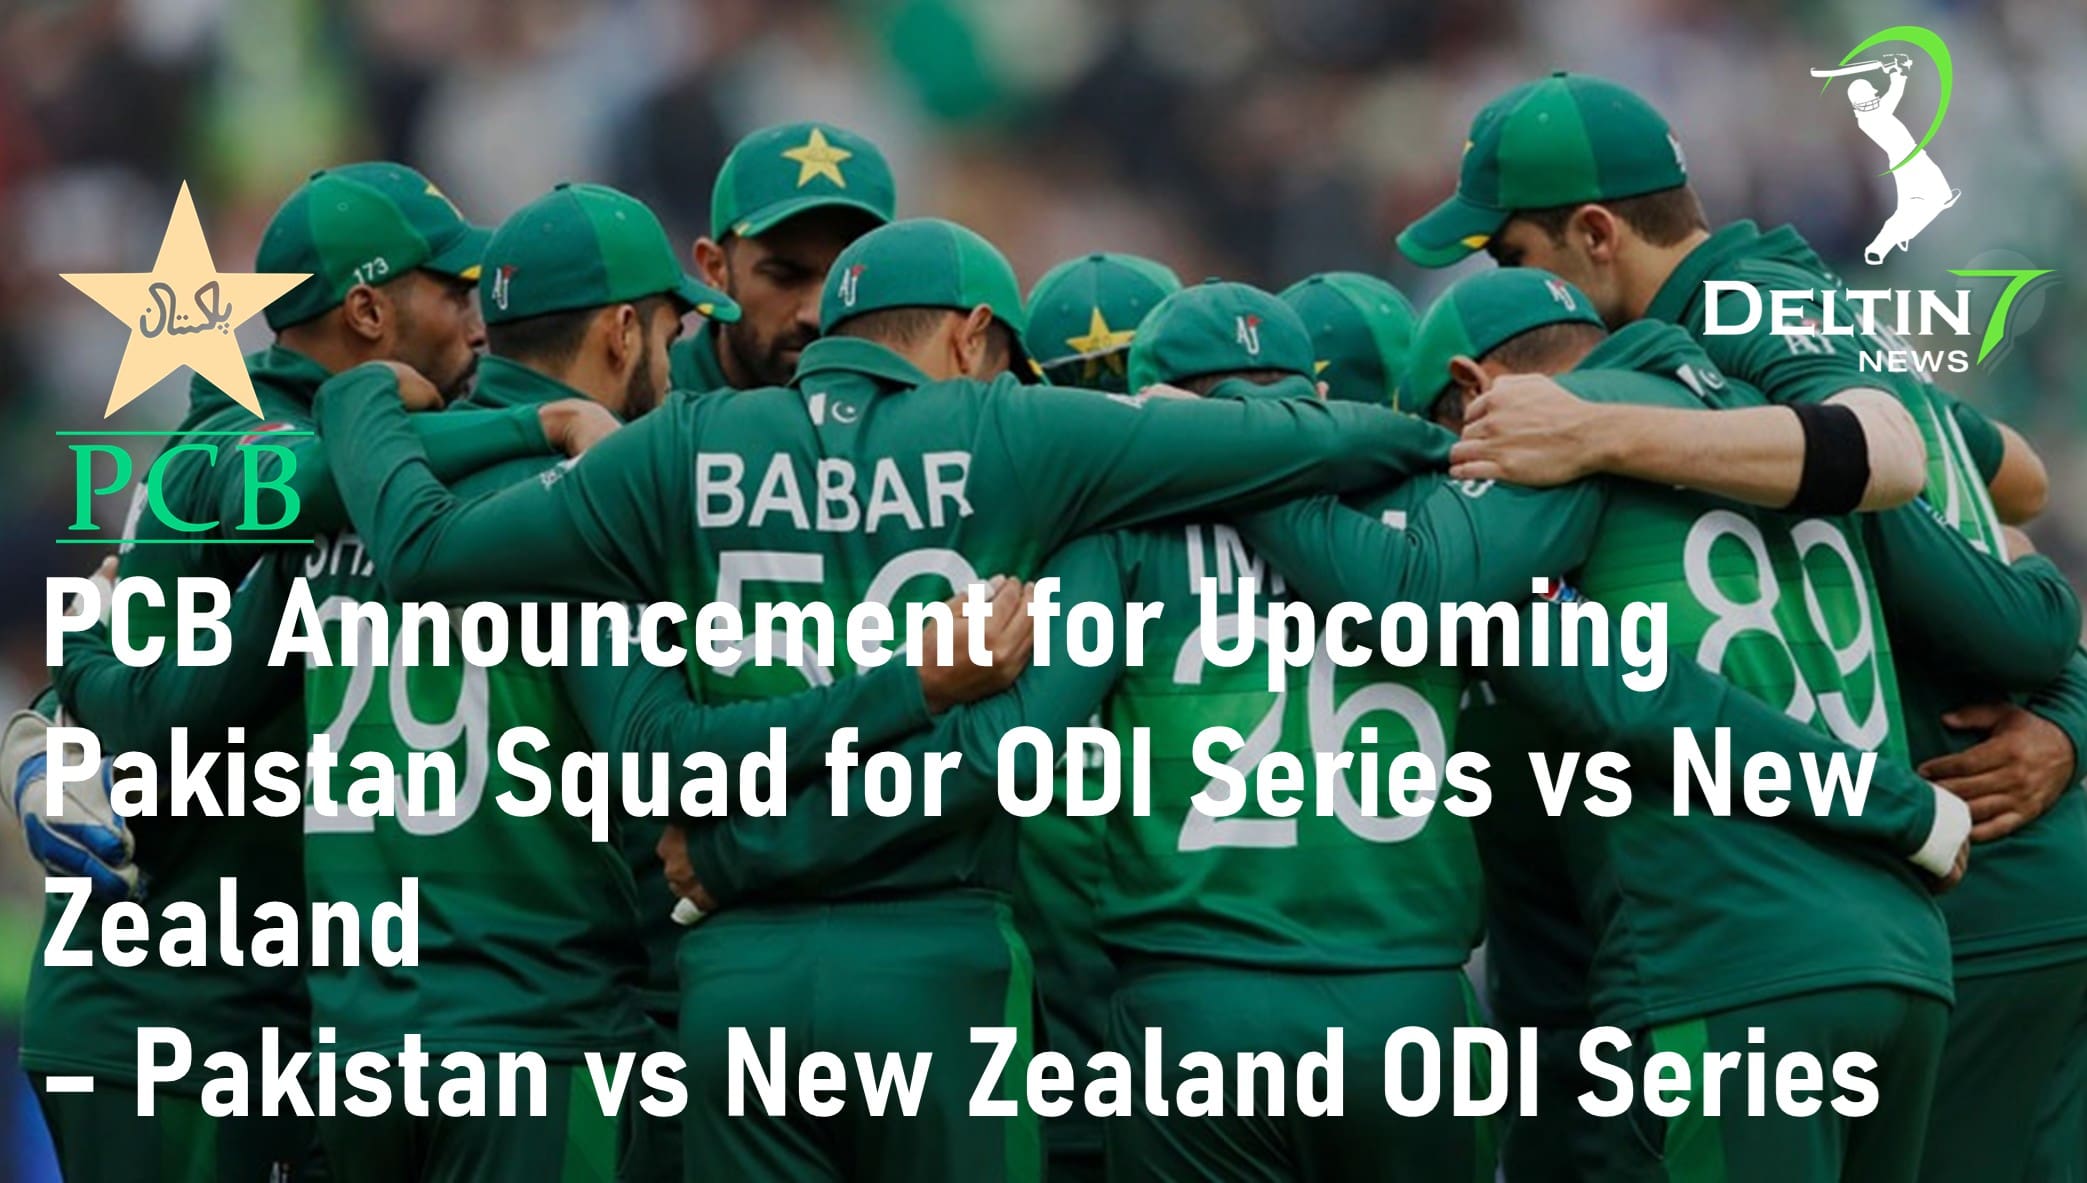 PCB Announcement for Upcoming Pakistan Squad for ODI Series vs New Zealand – Pakistan vs New Zealand ODI Series